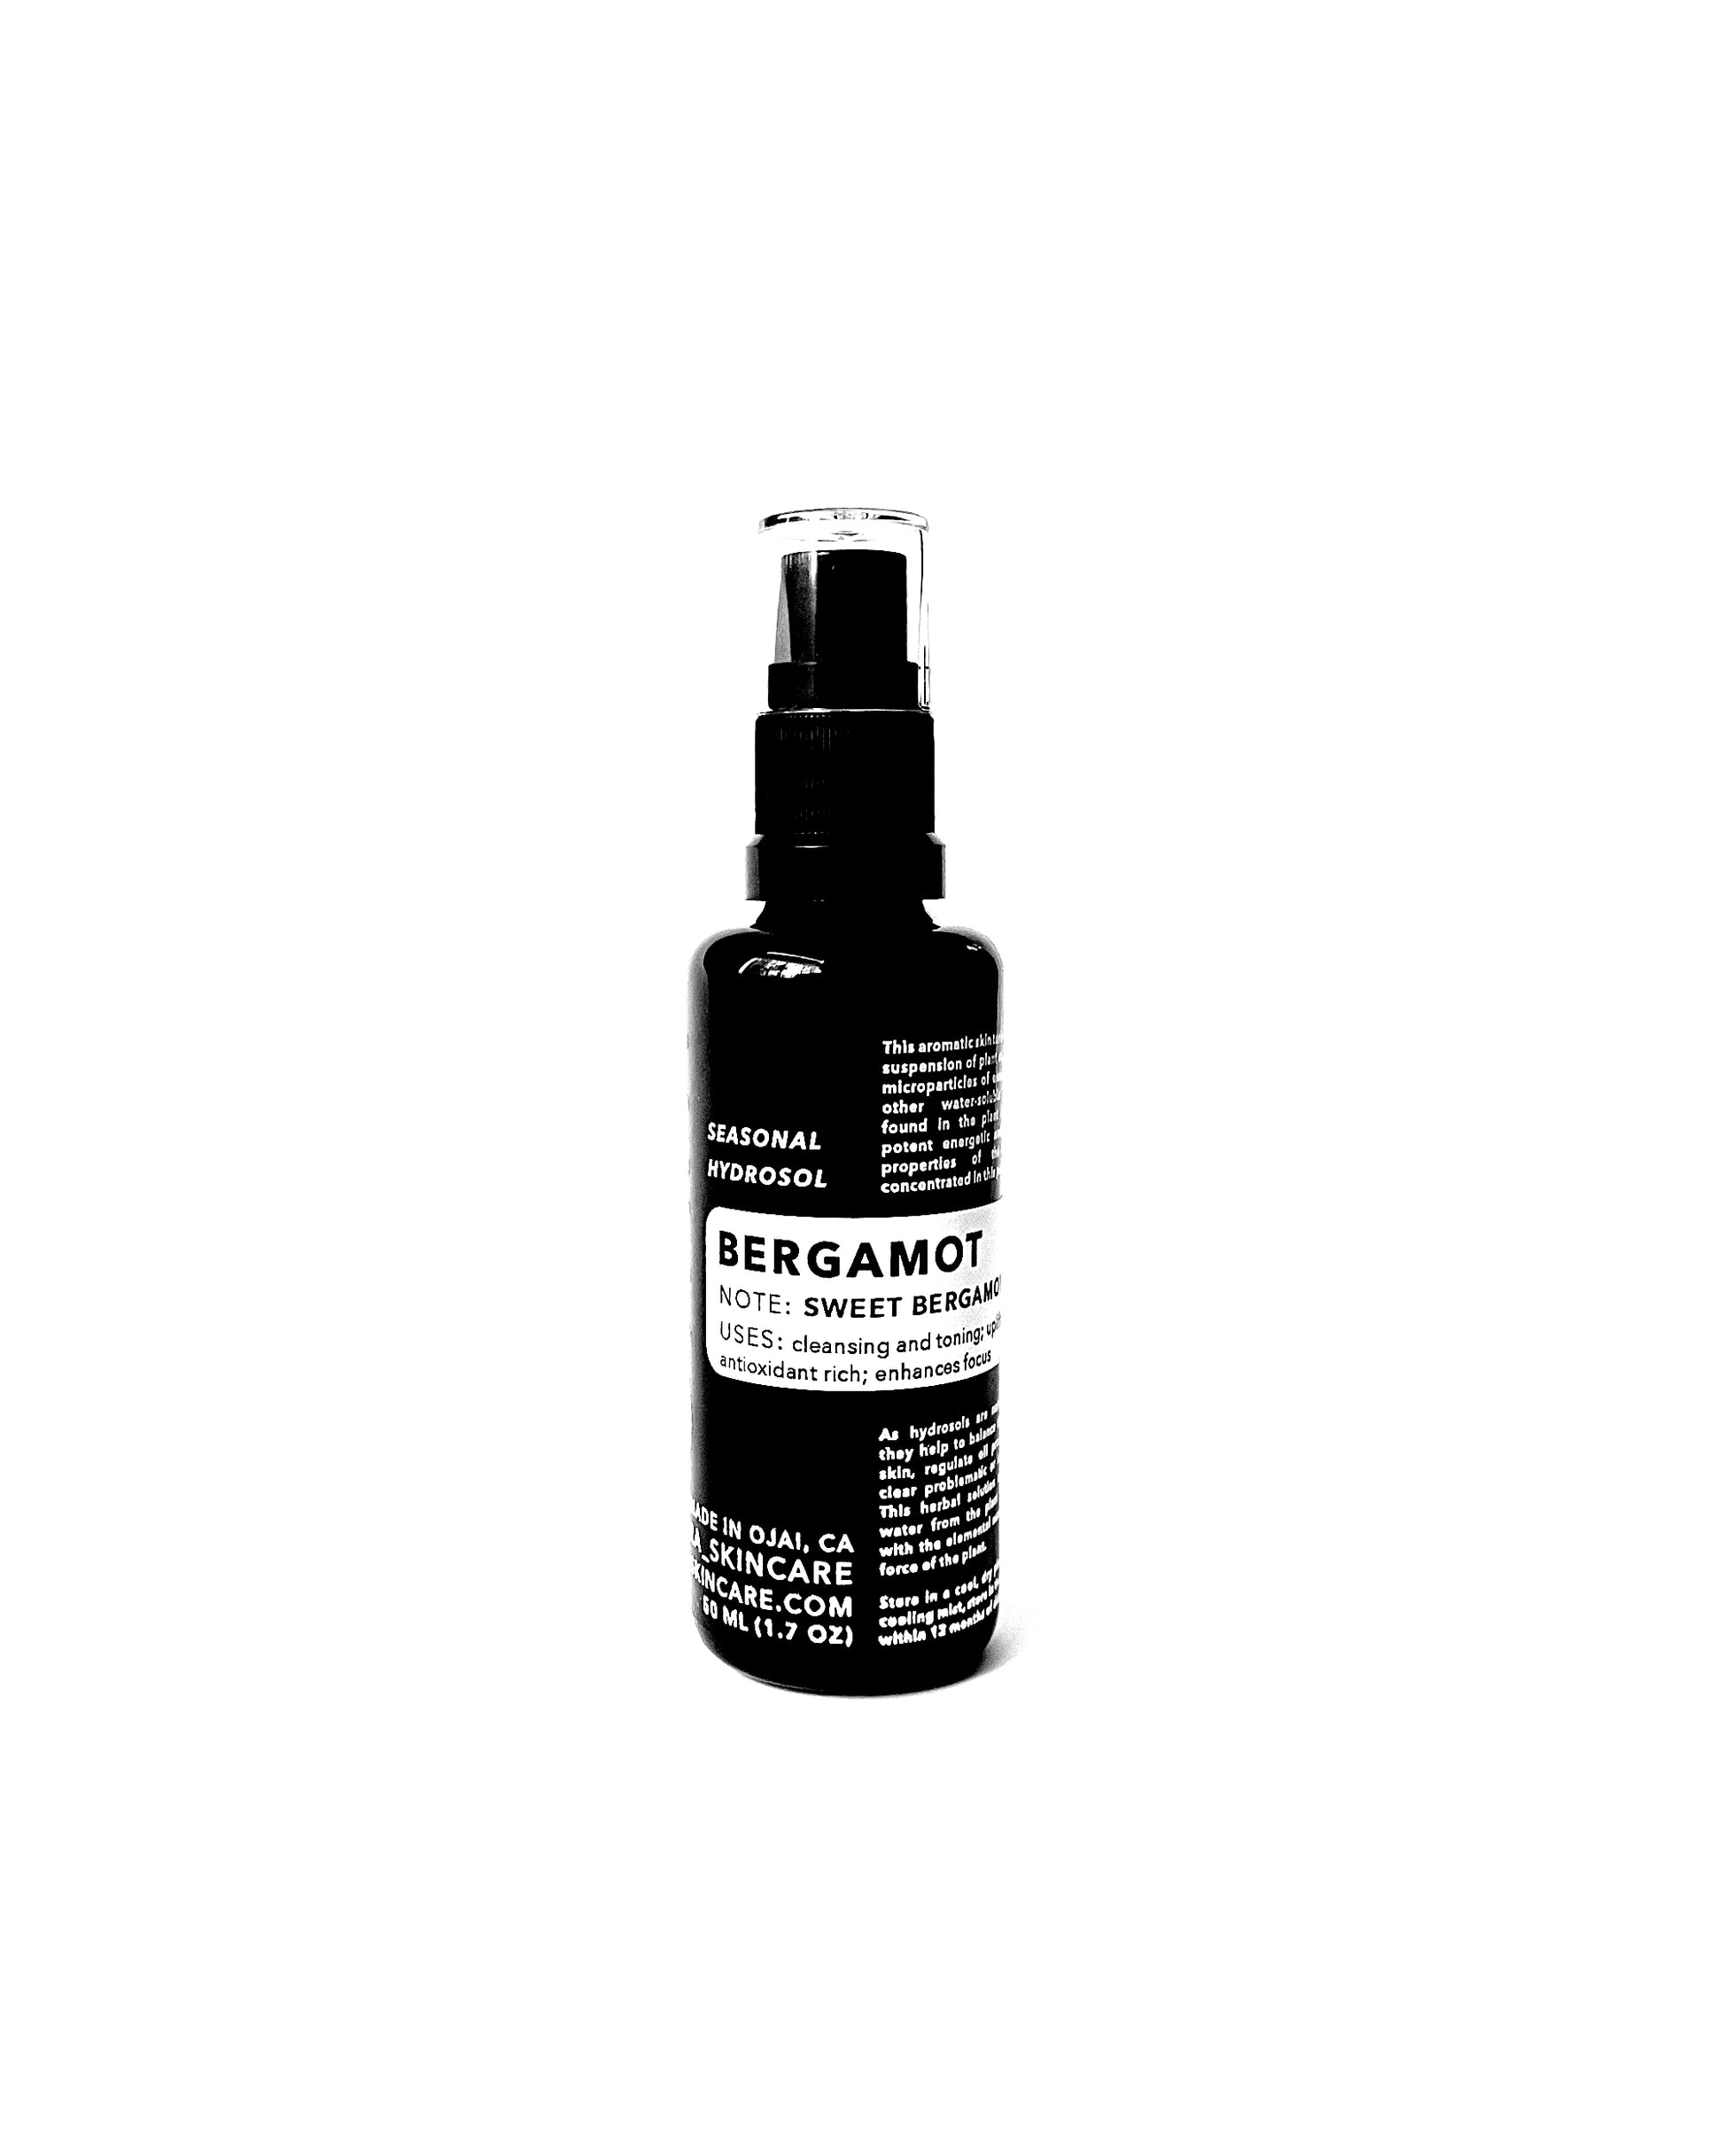 gara skincare bergamot hydrosol product image 2